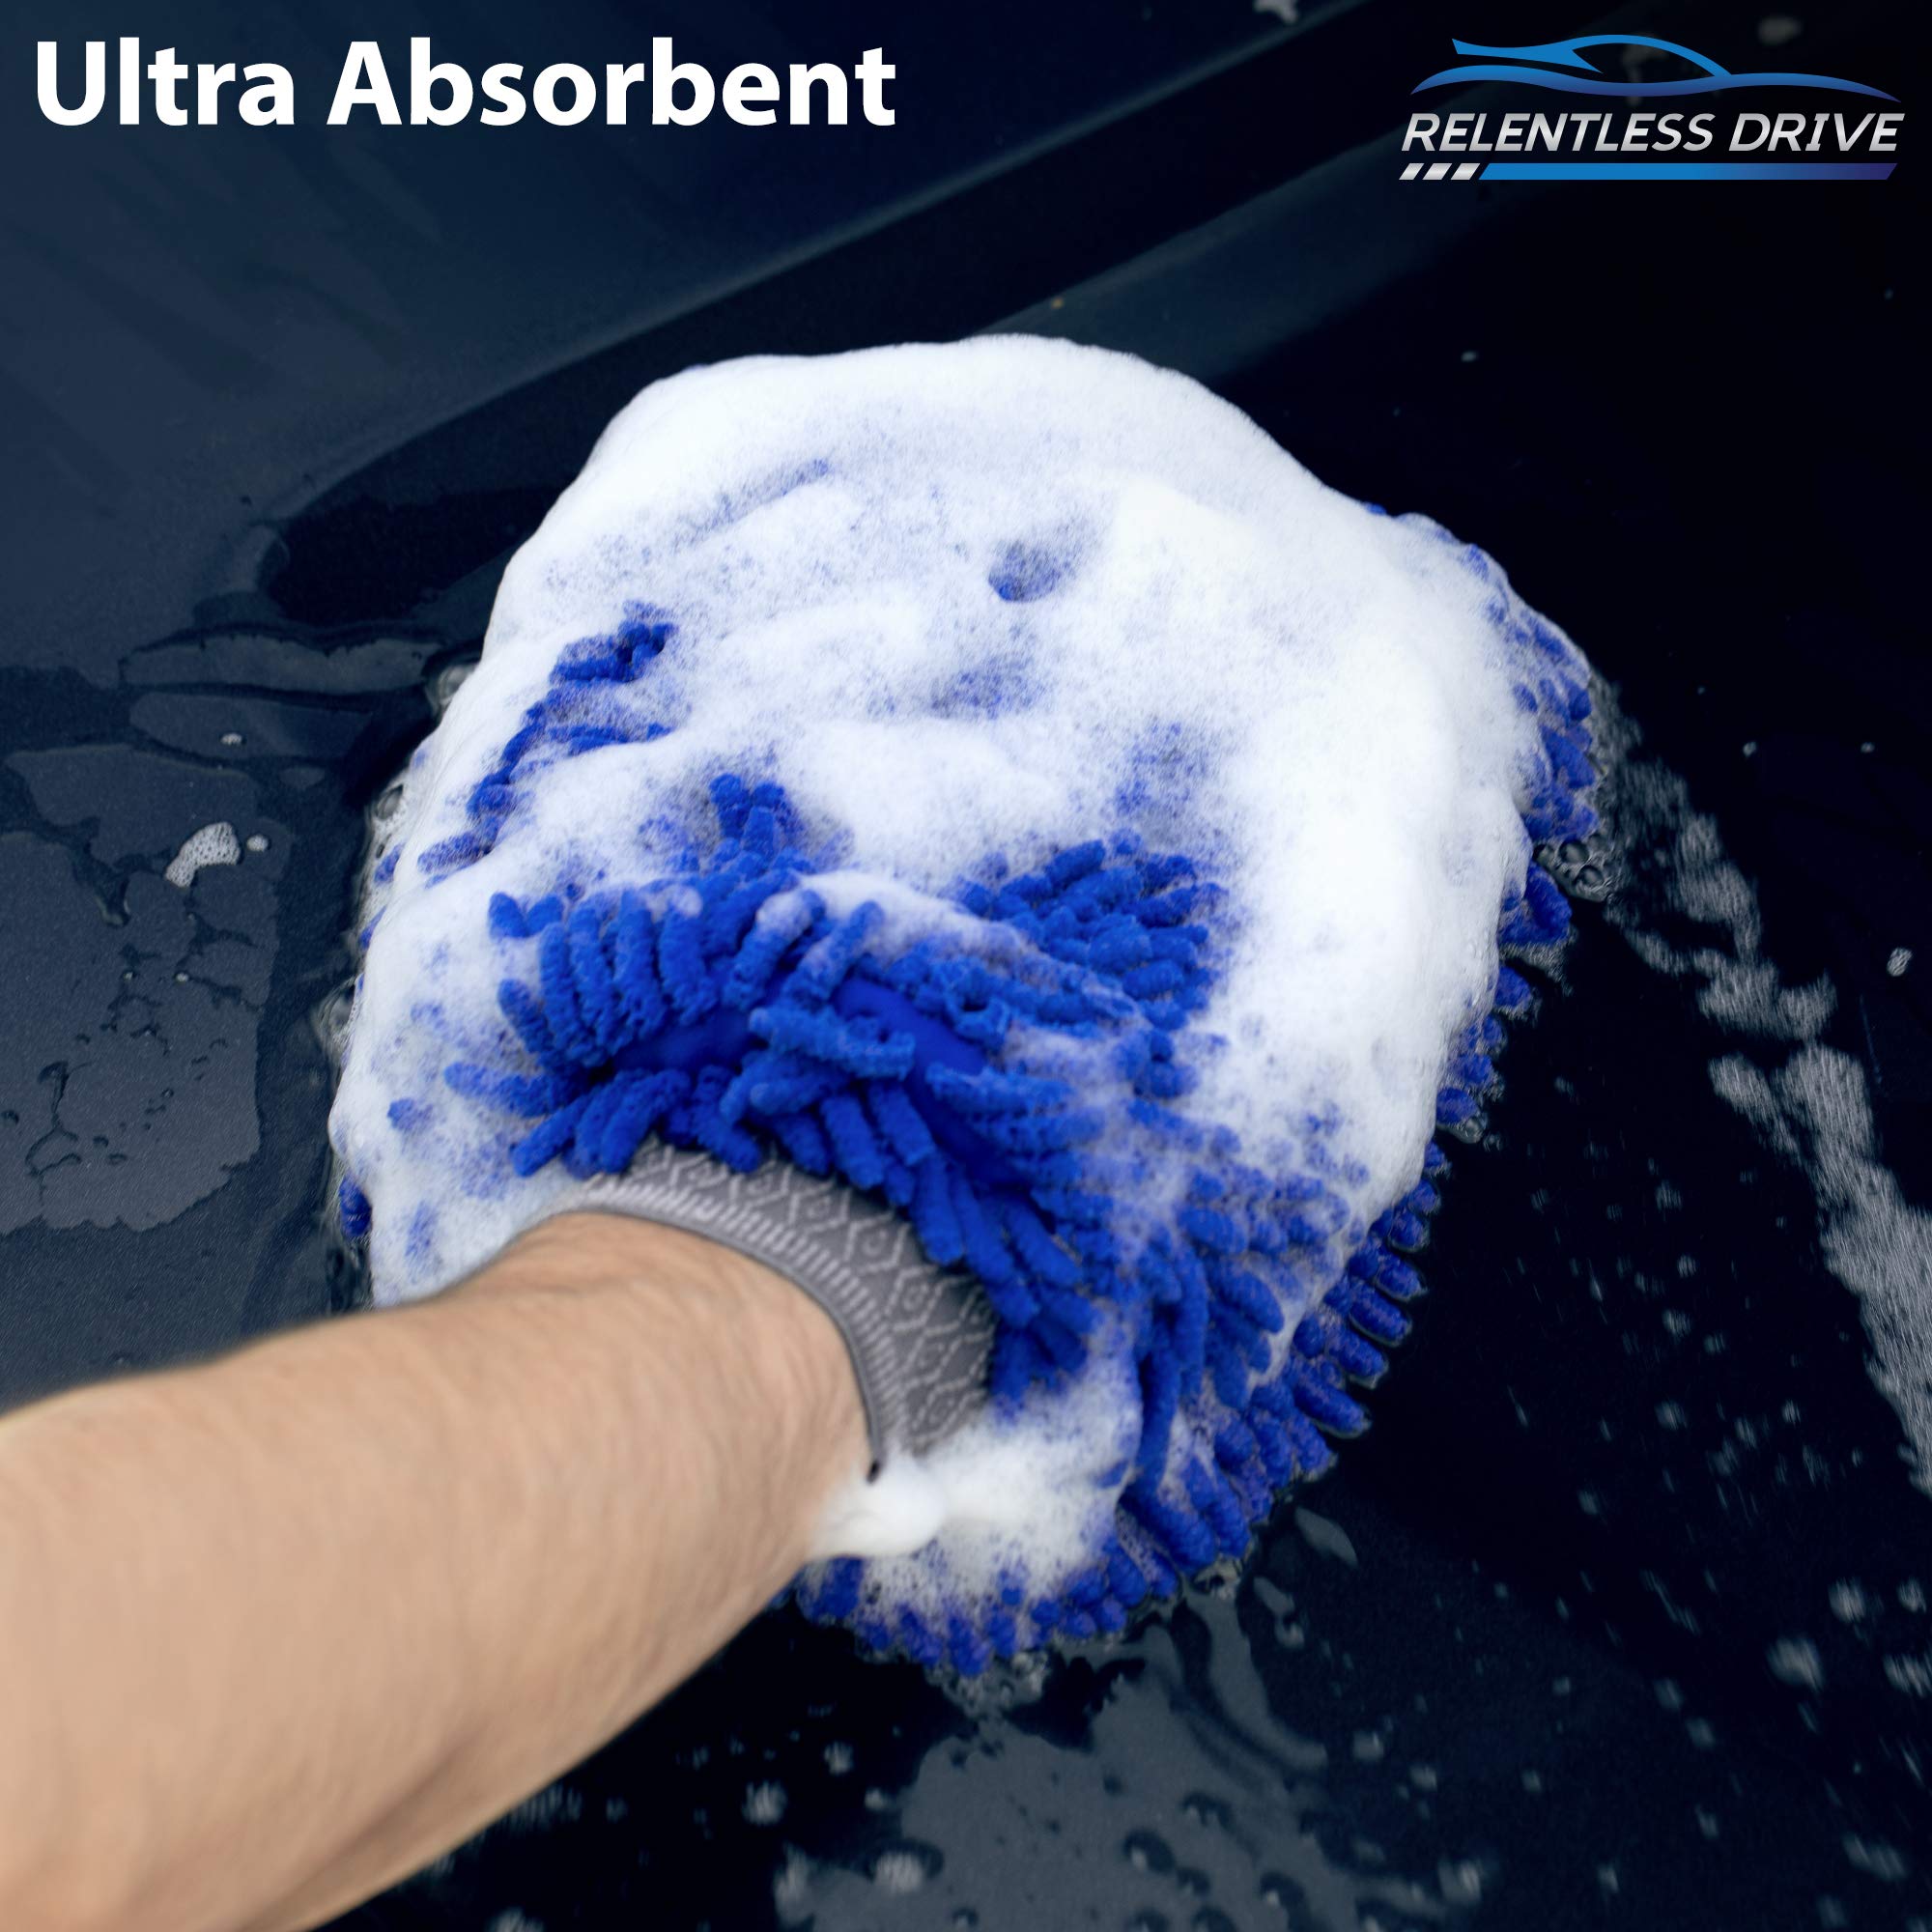 Car Wash Washing Microfiber Chenille Mitt Auto Cleaning Glove Dust